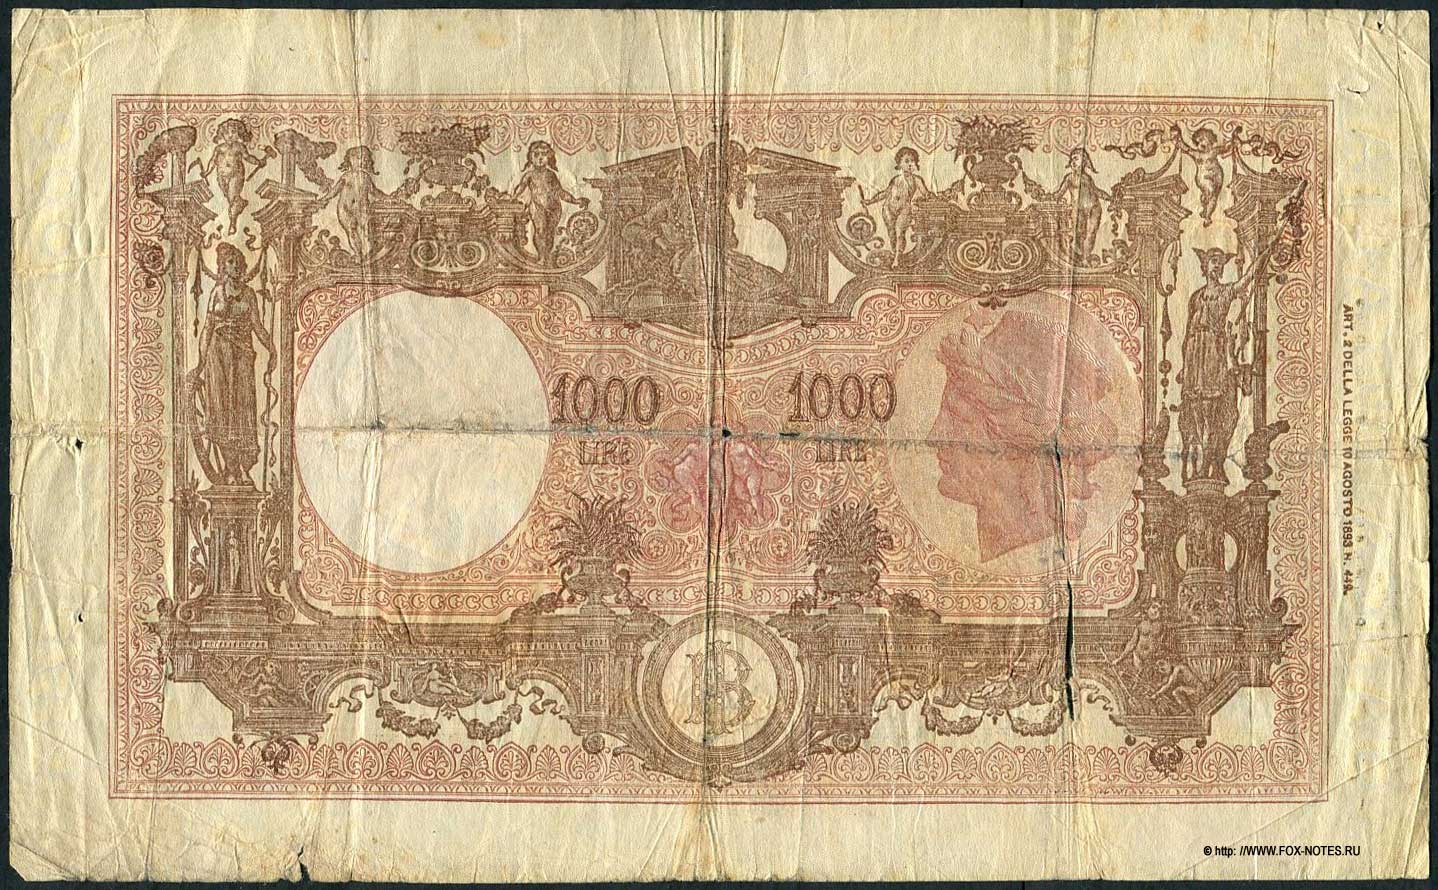   Banca d'Italia 1000  1944  Azzolini Urbini